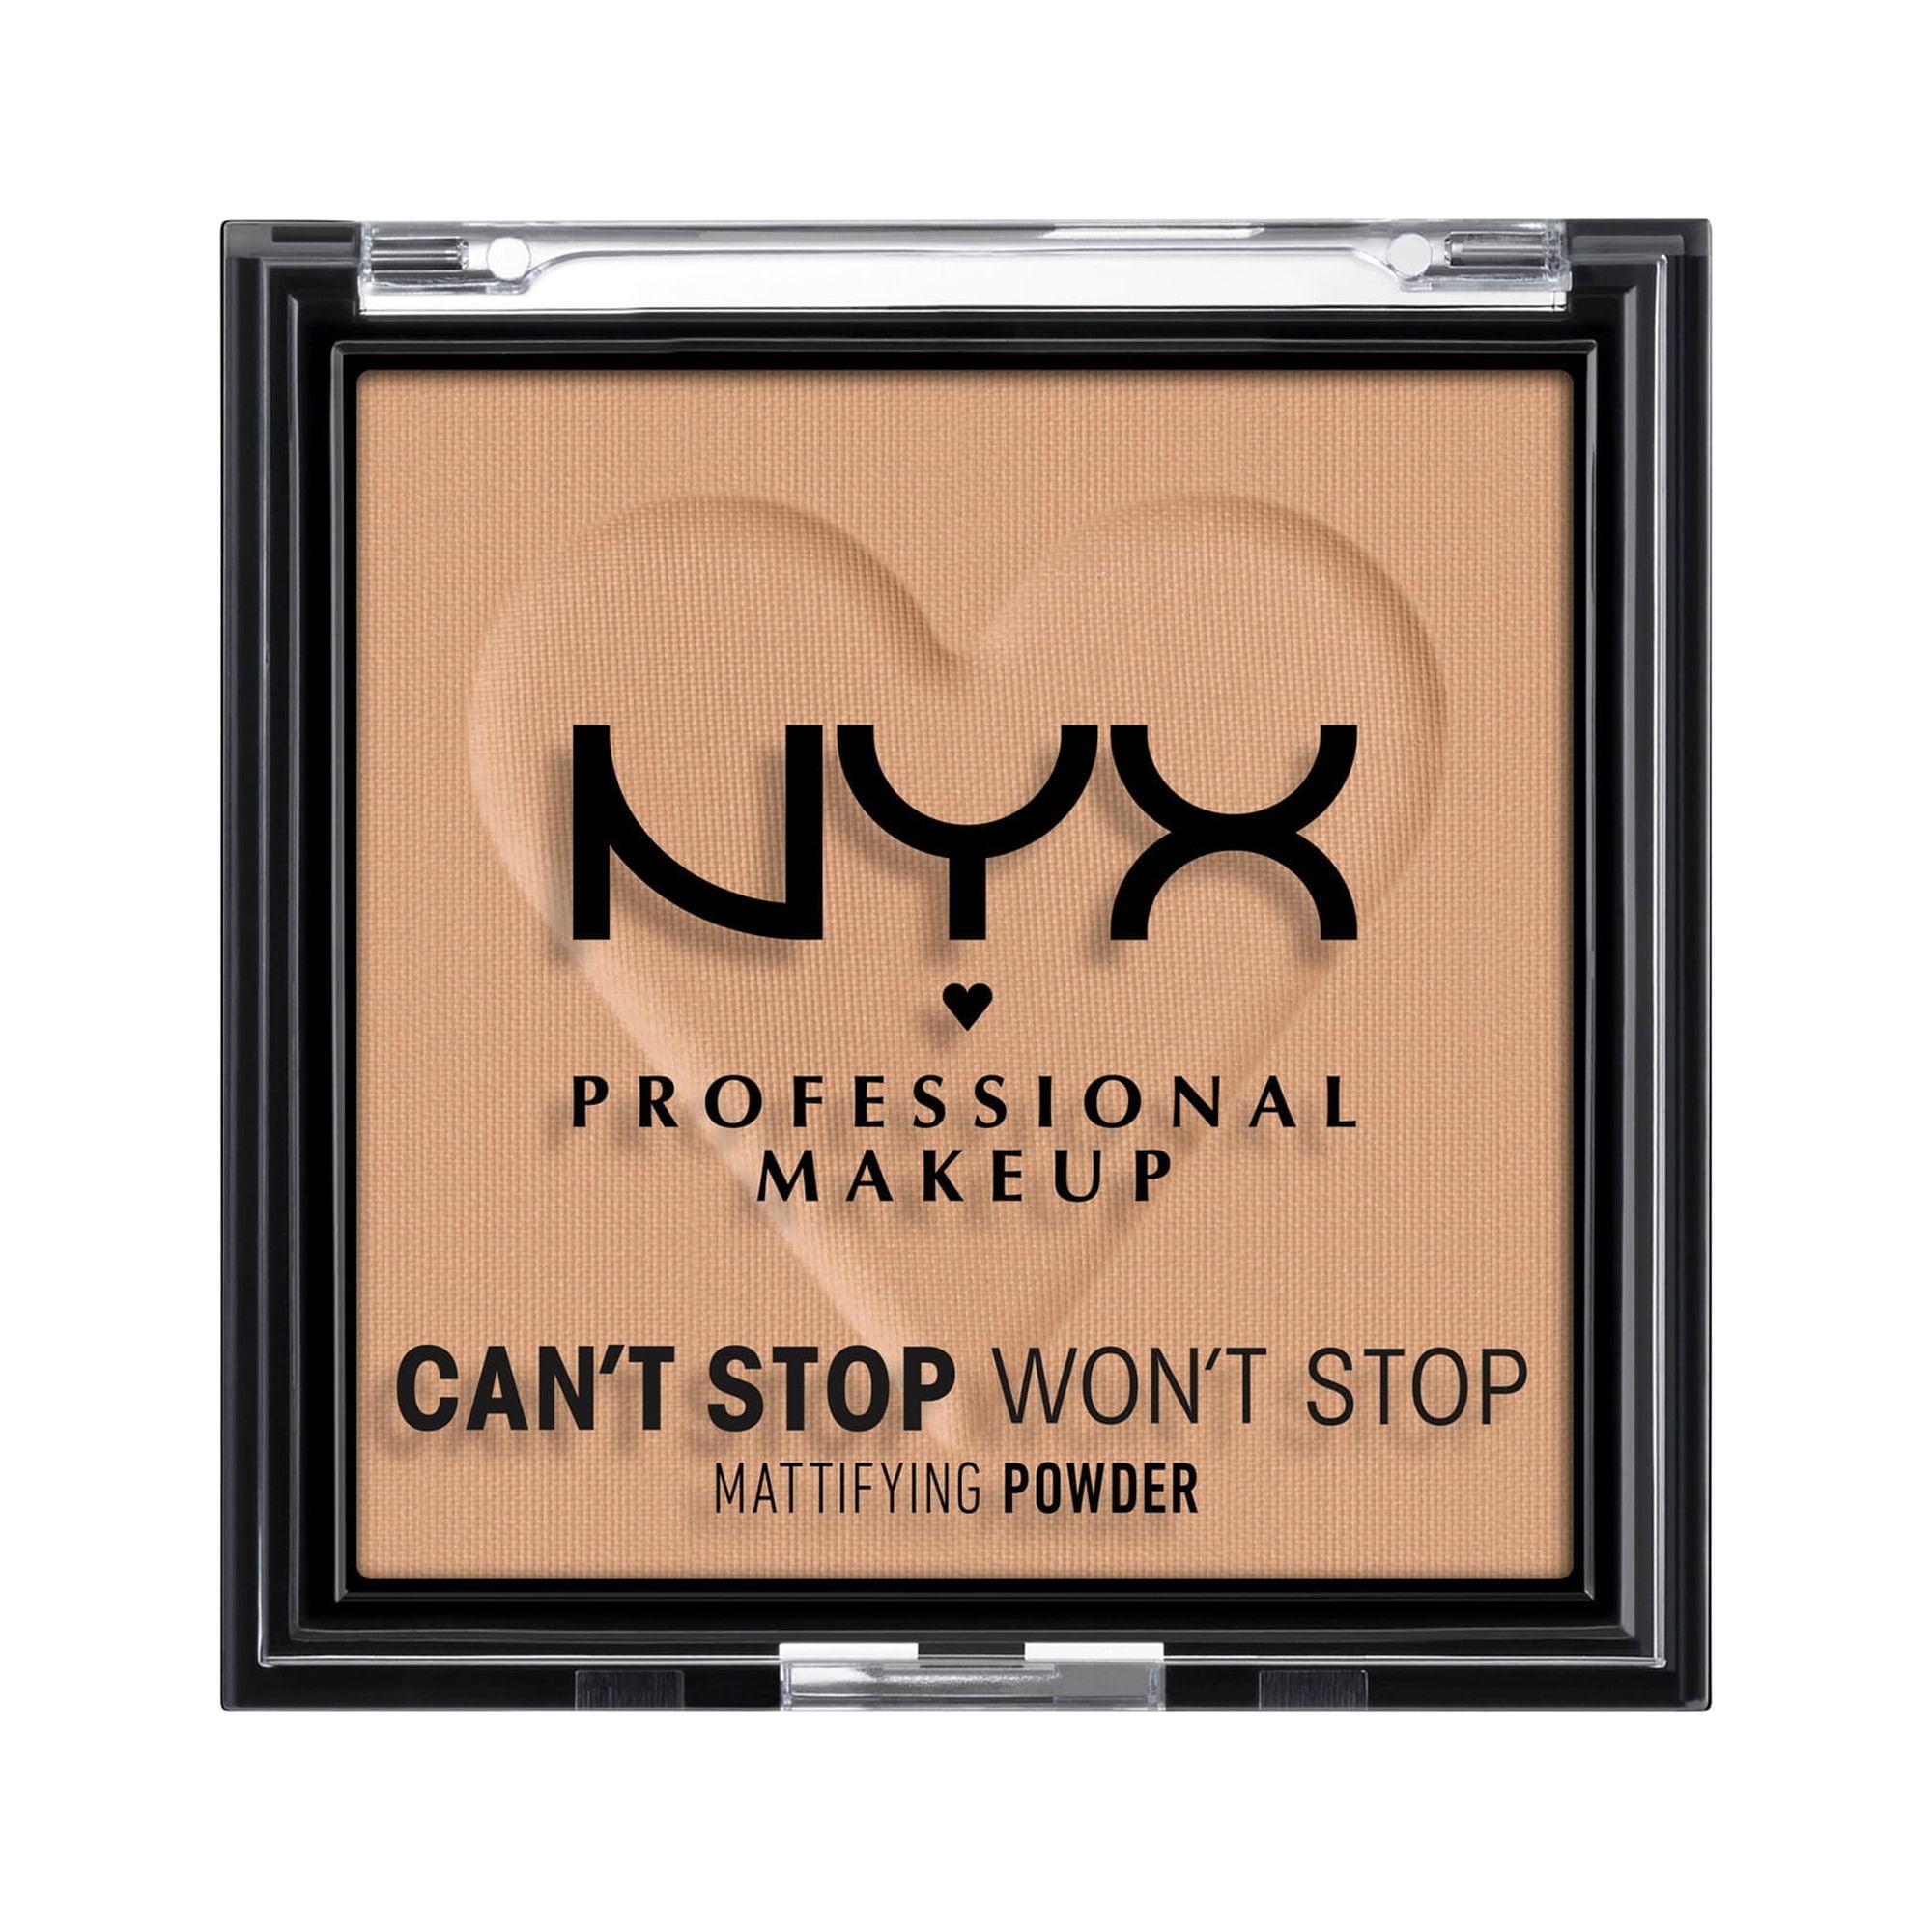 Stop Makeup Stop Powder, Professional Won\'t NYX Mattifying Can\'t oz Pressed 0.21 Tan,